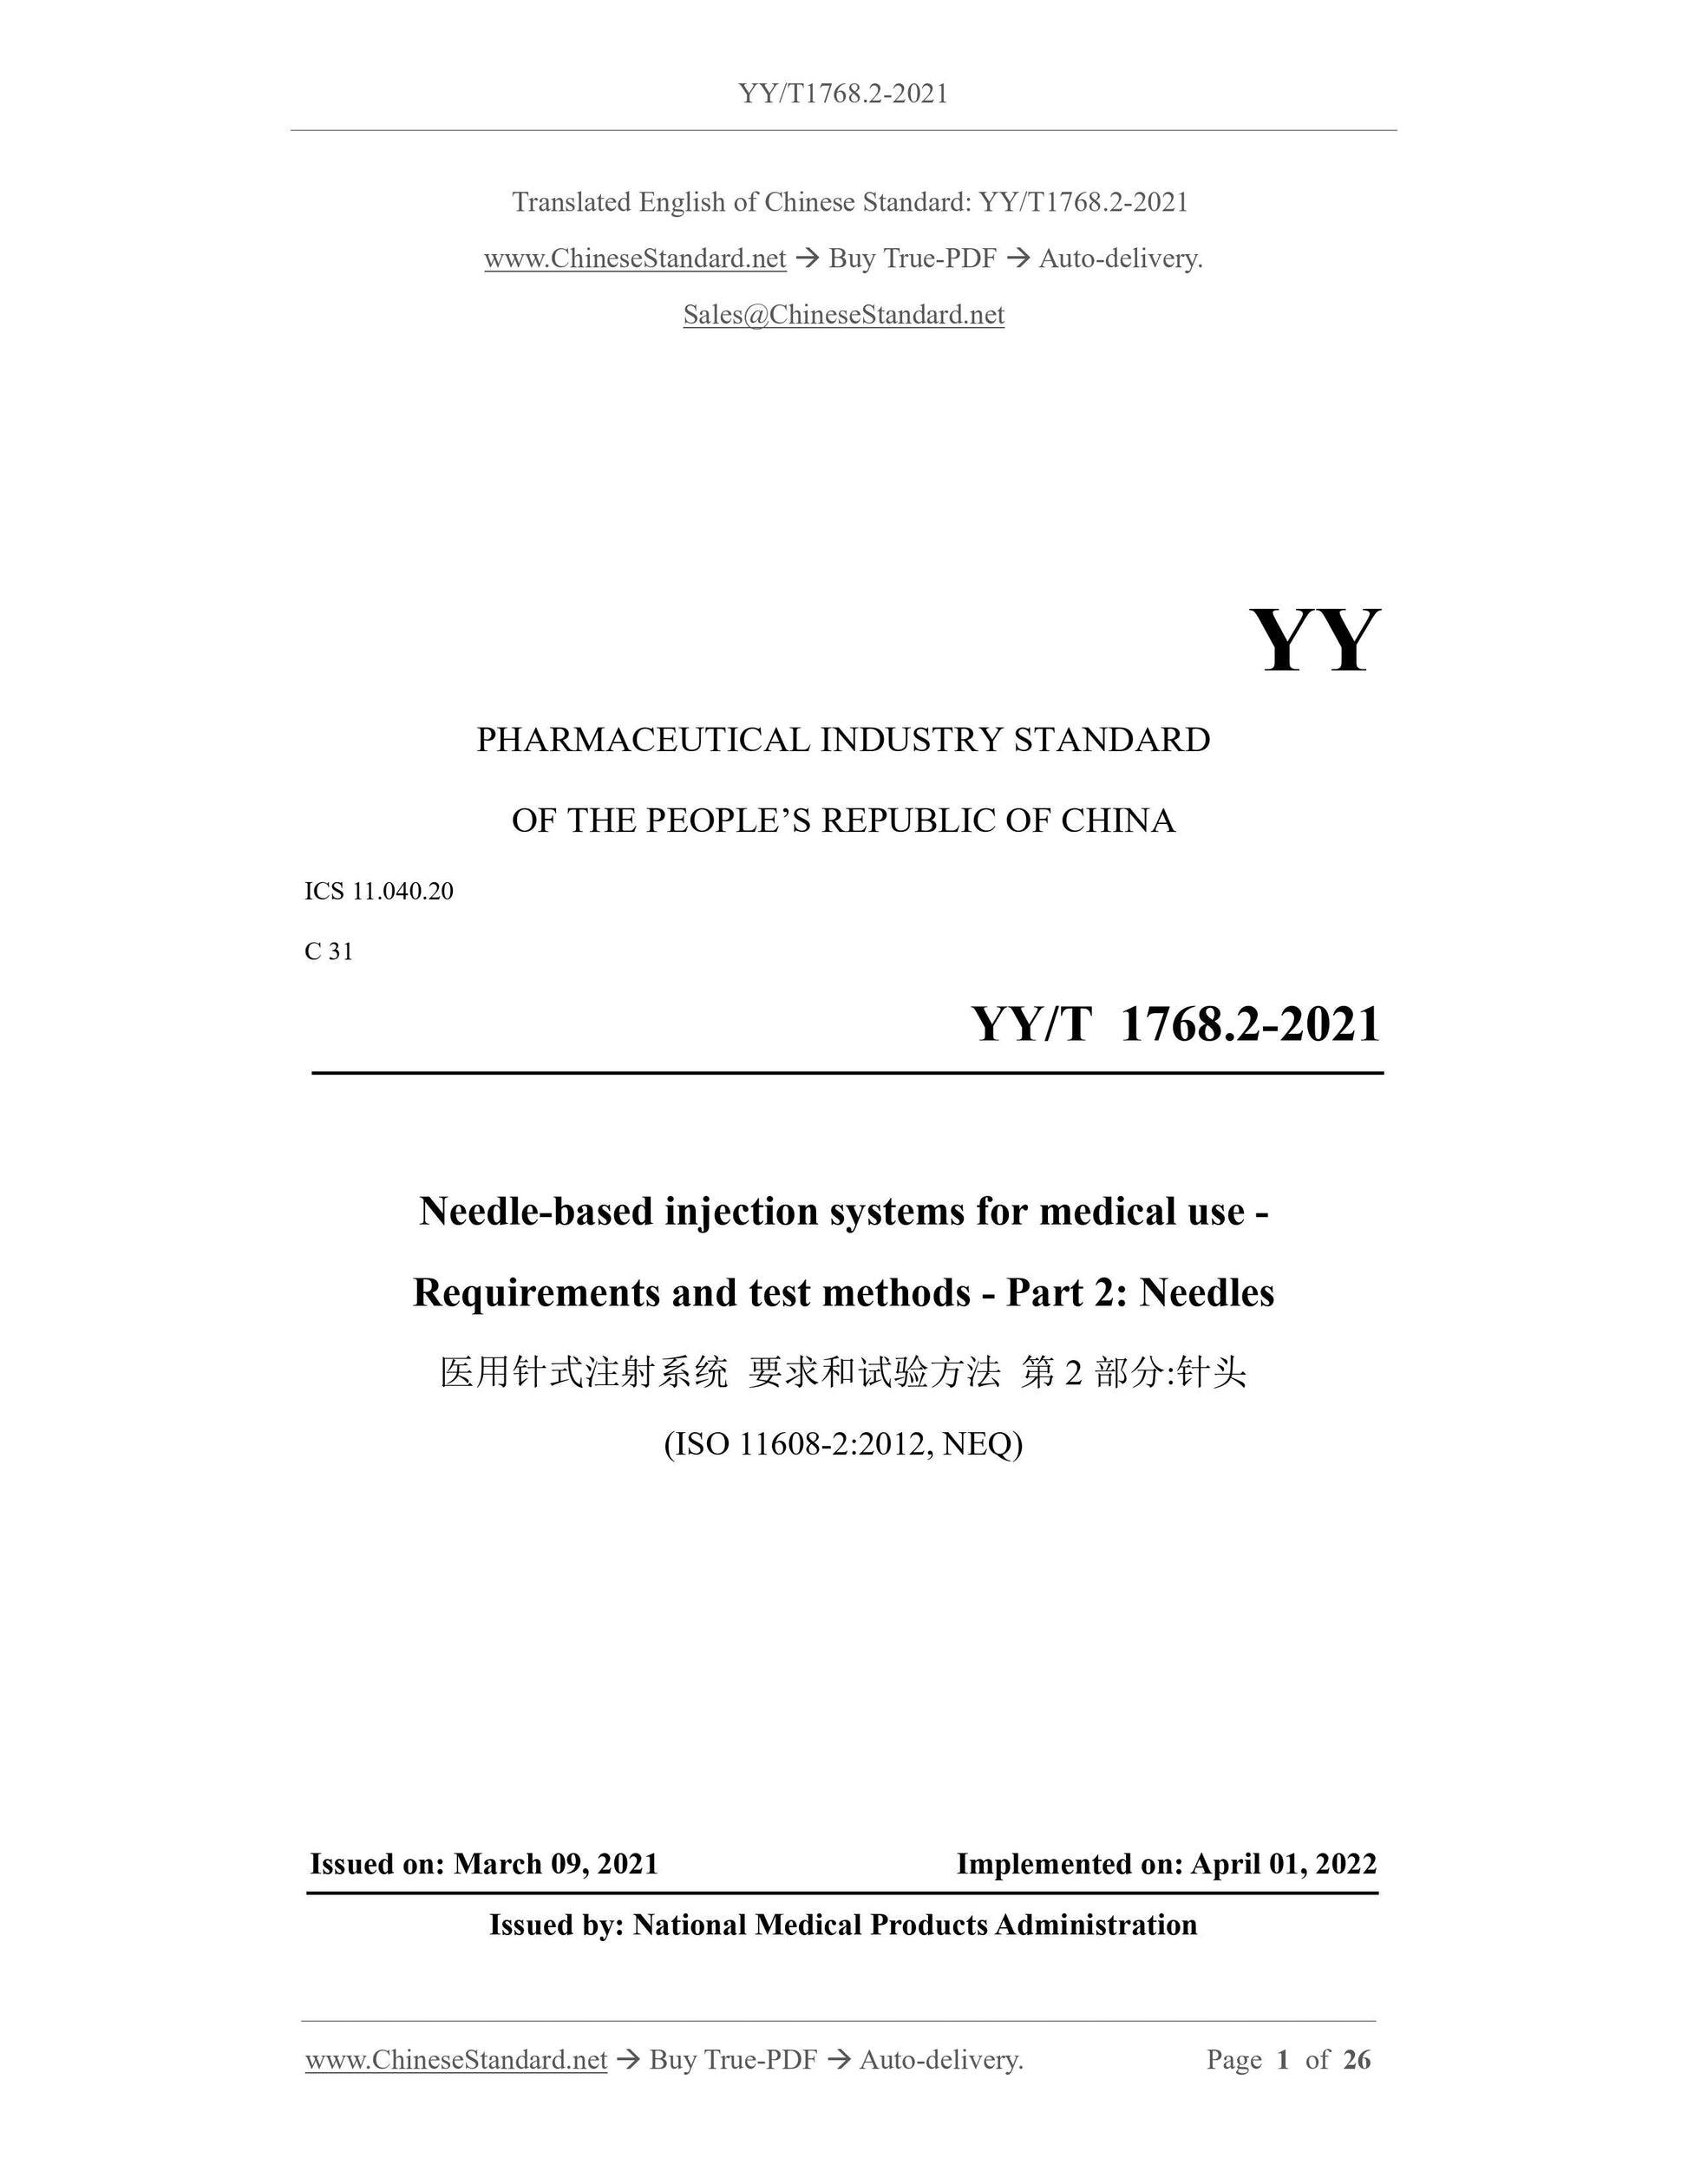 YY/T 1768.2-2021 Page 1